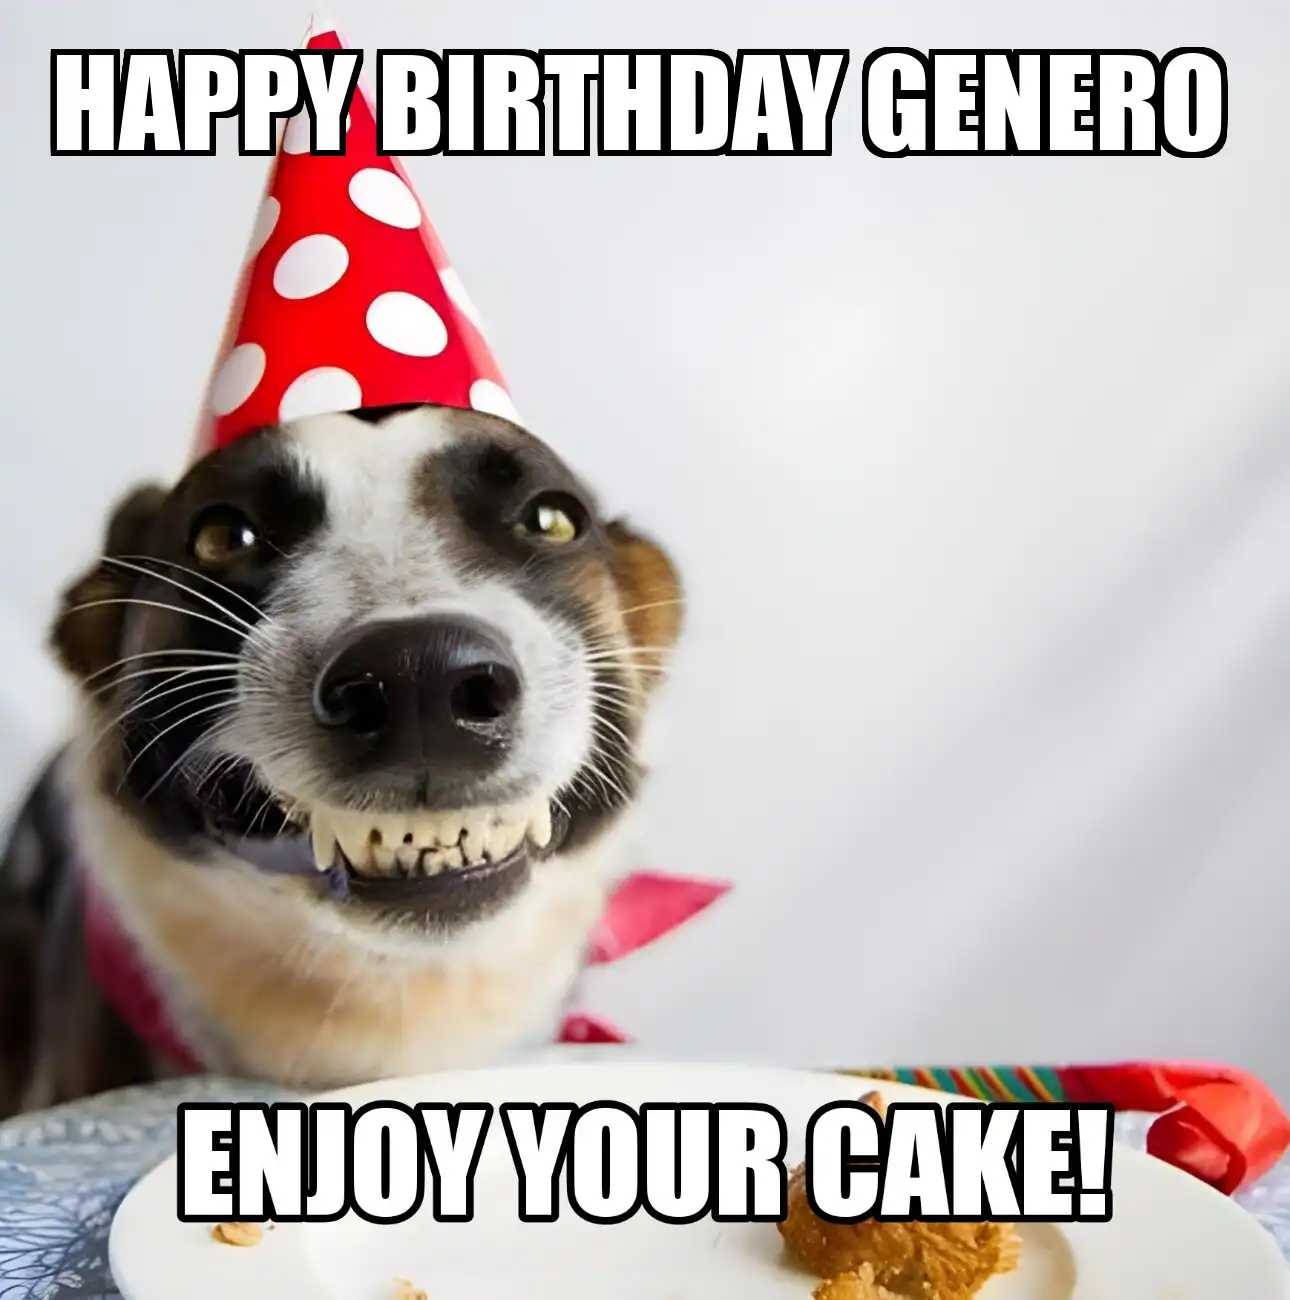 Happy Birthday Genero Enjoy Your Cake Dog Meme